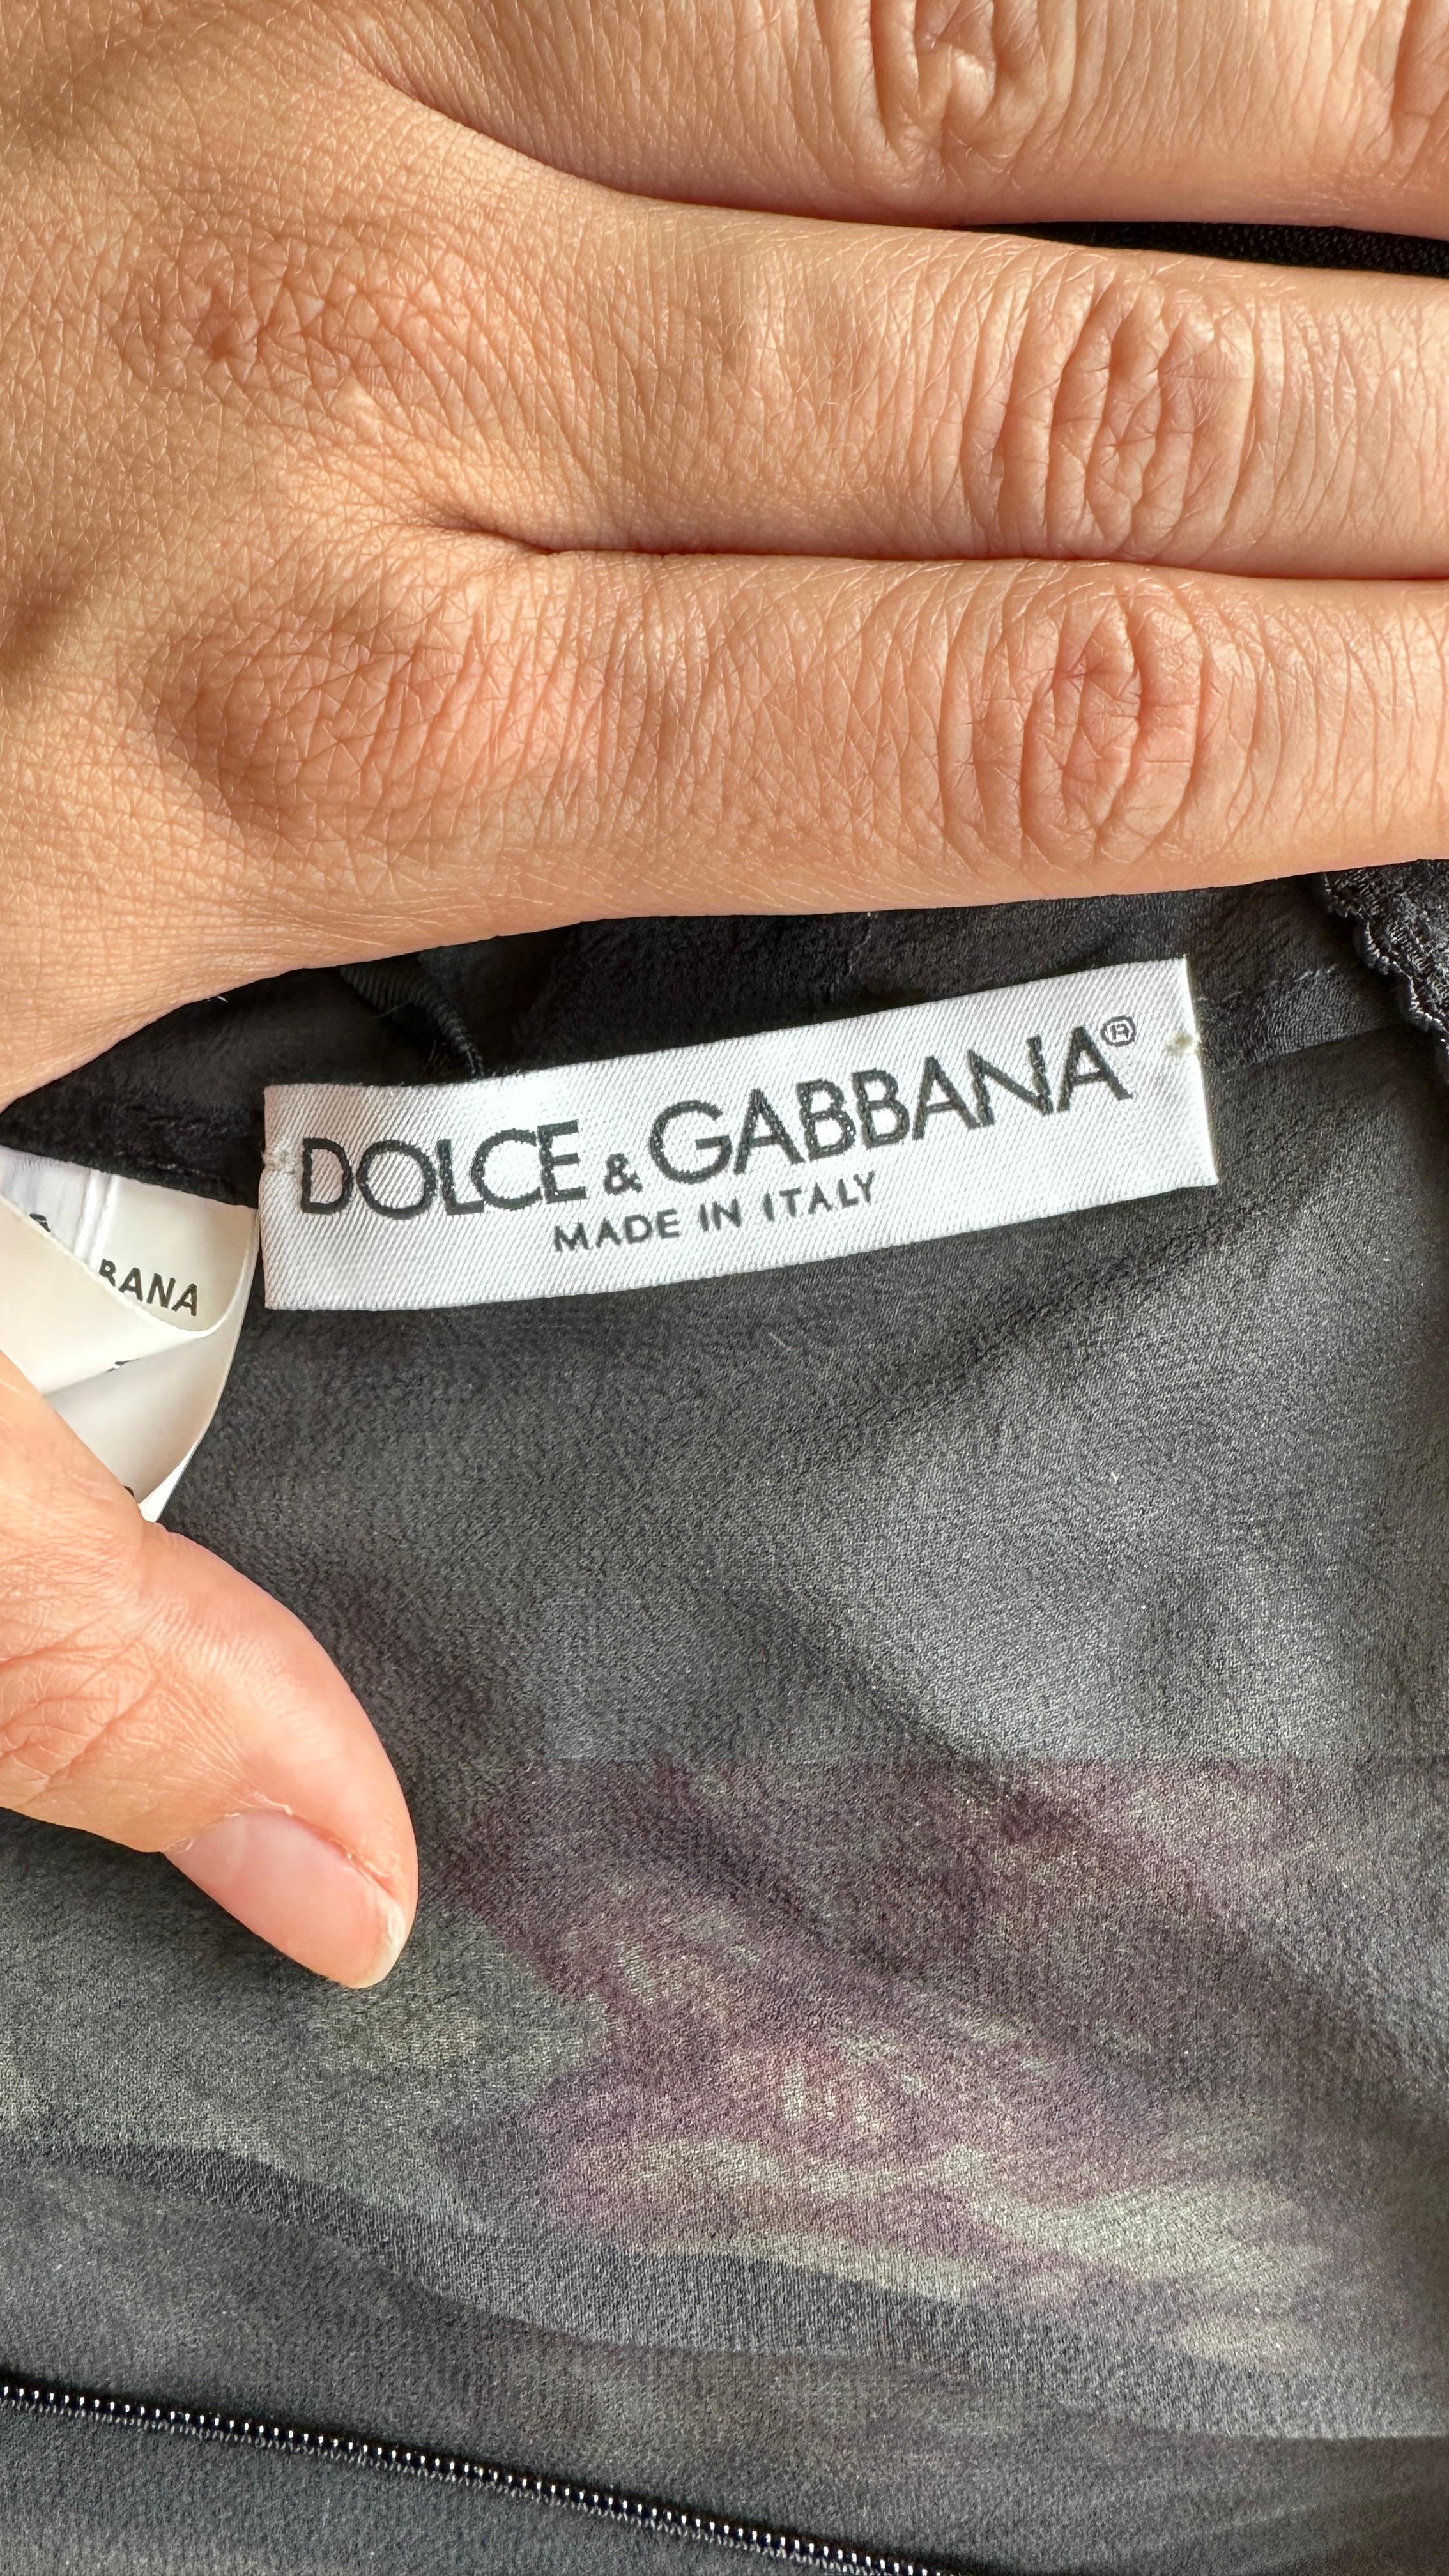 Dolce & Gabbana Black Silk Camisole with Floral Applique & Built in Bra f/w 1999 2